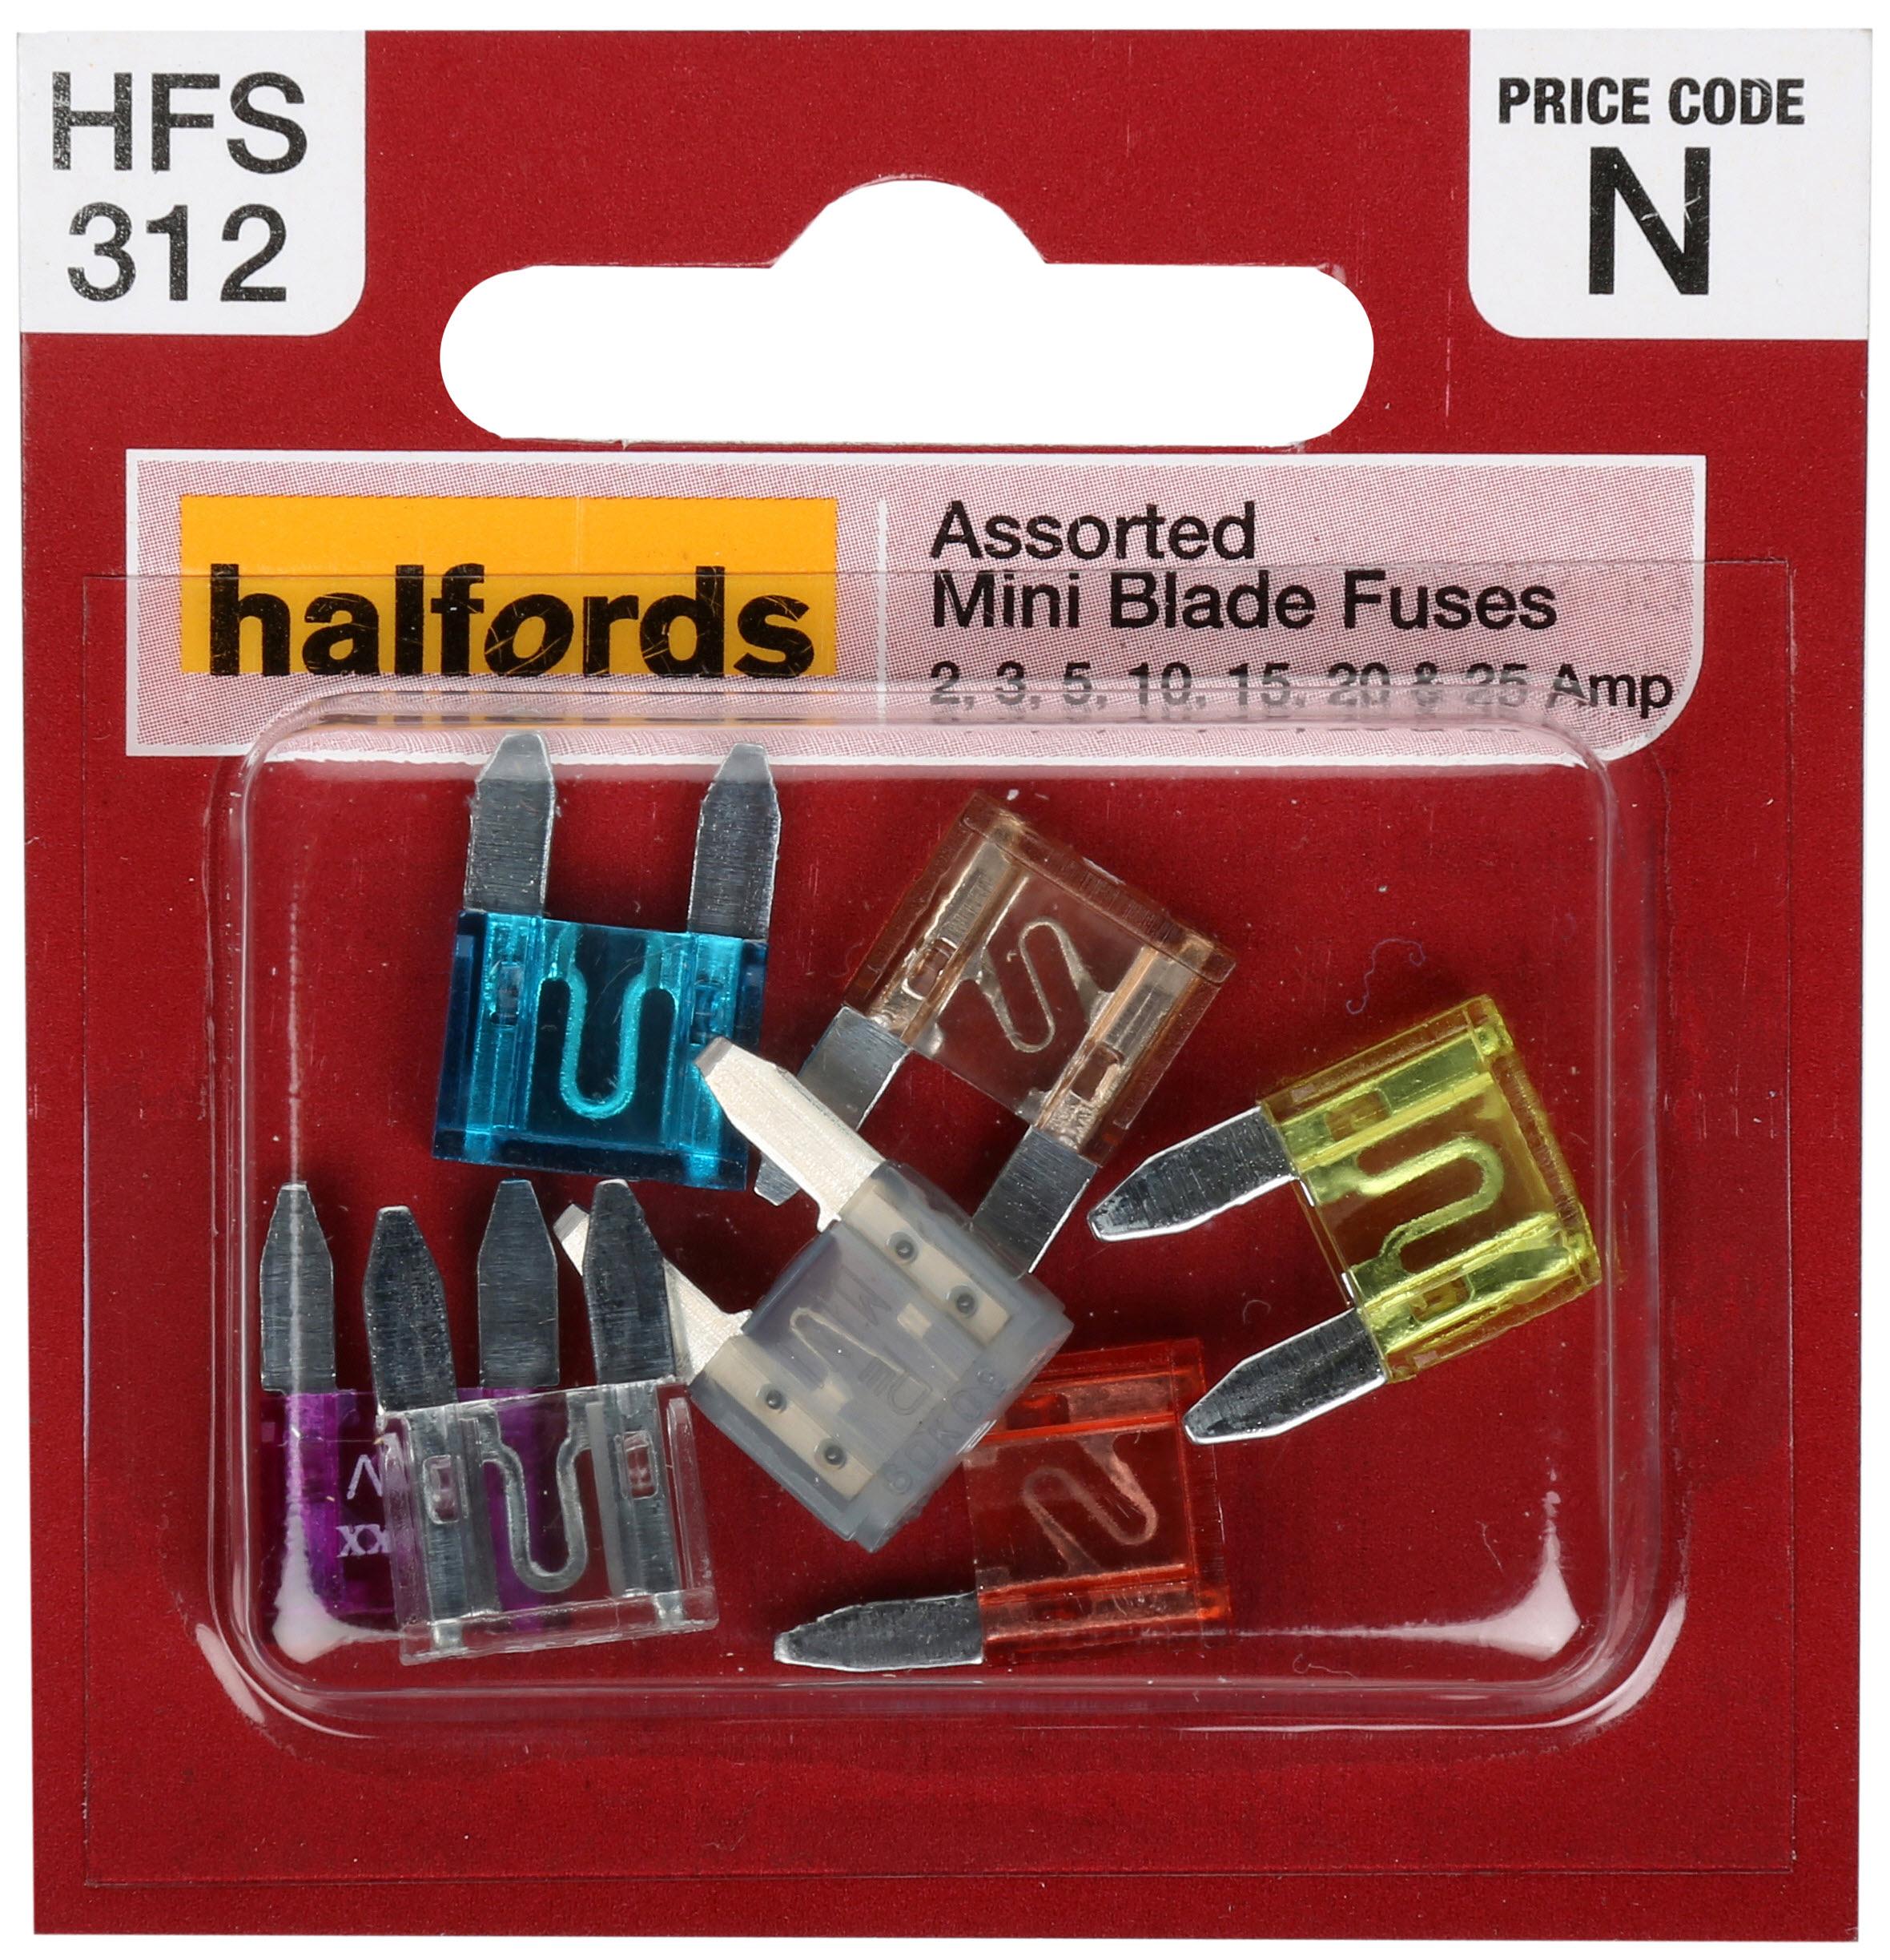 Halfords Assorted Mini Blade Fuses 3-5-10-15-20-25 Amp